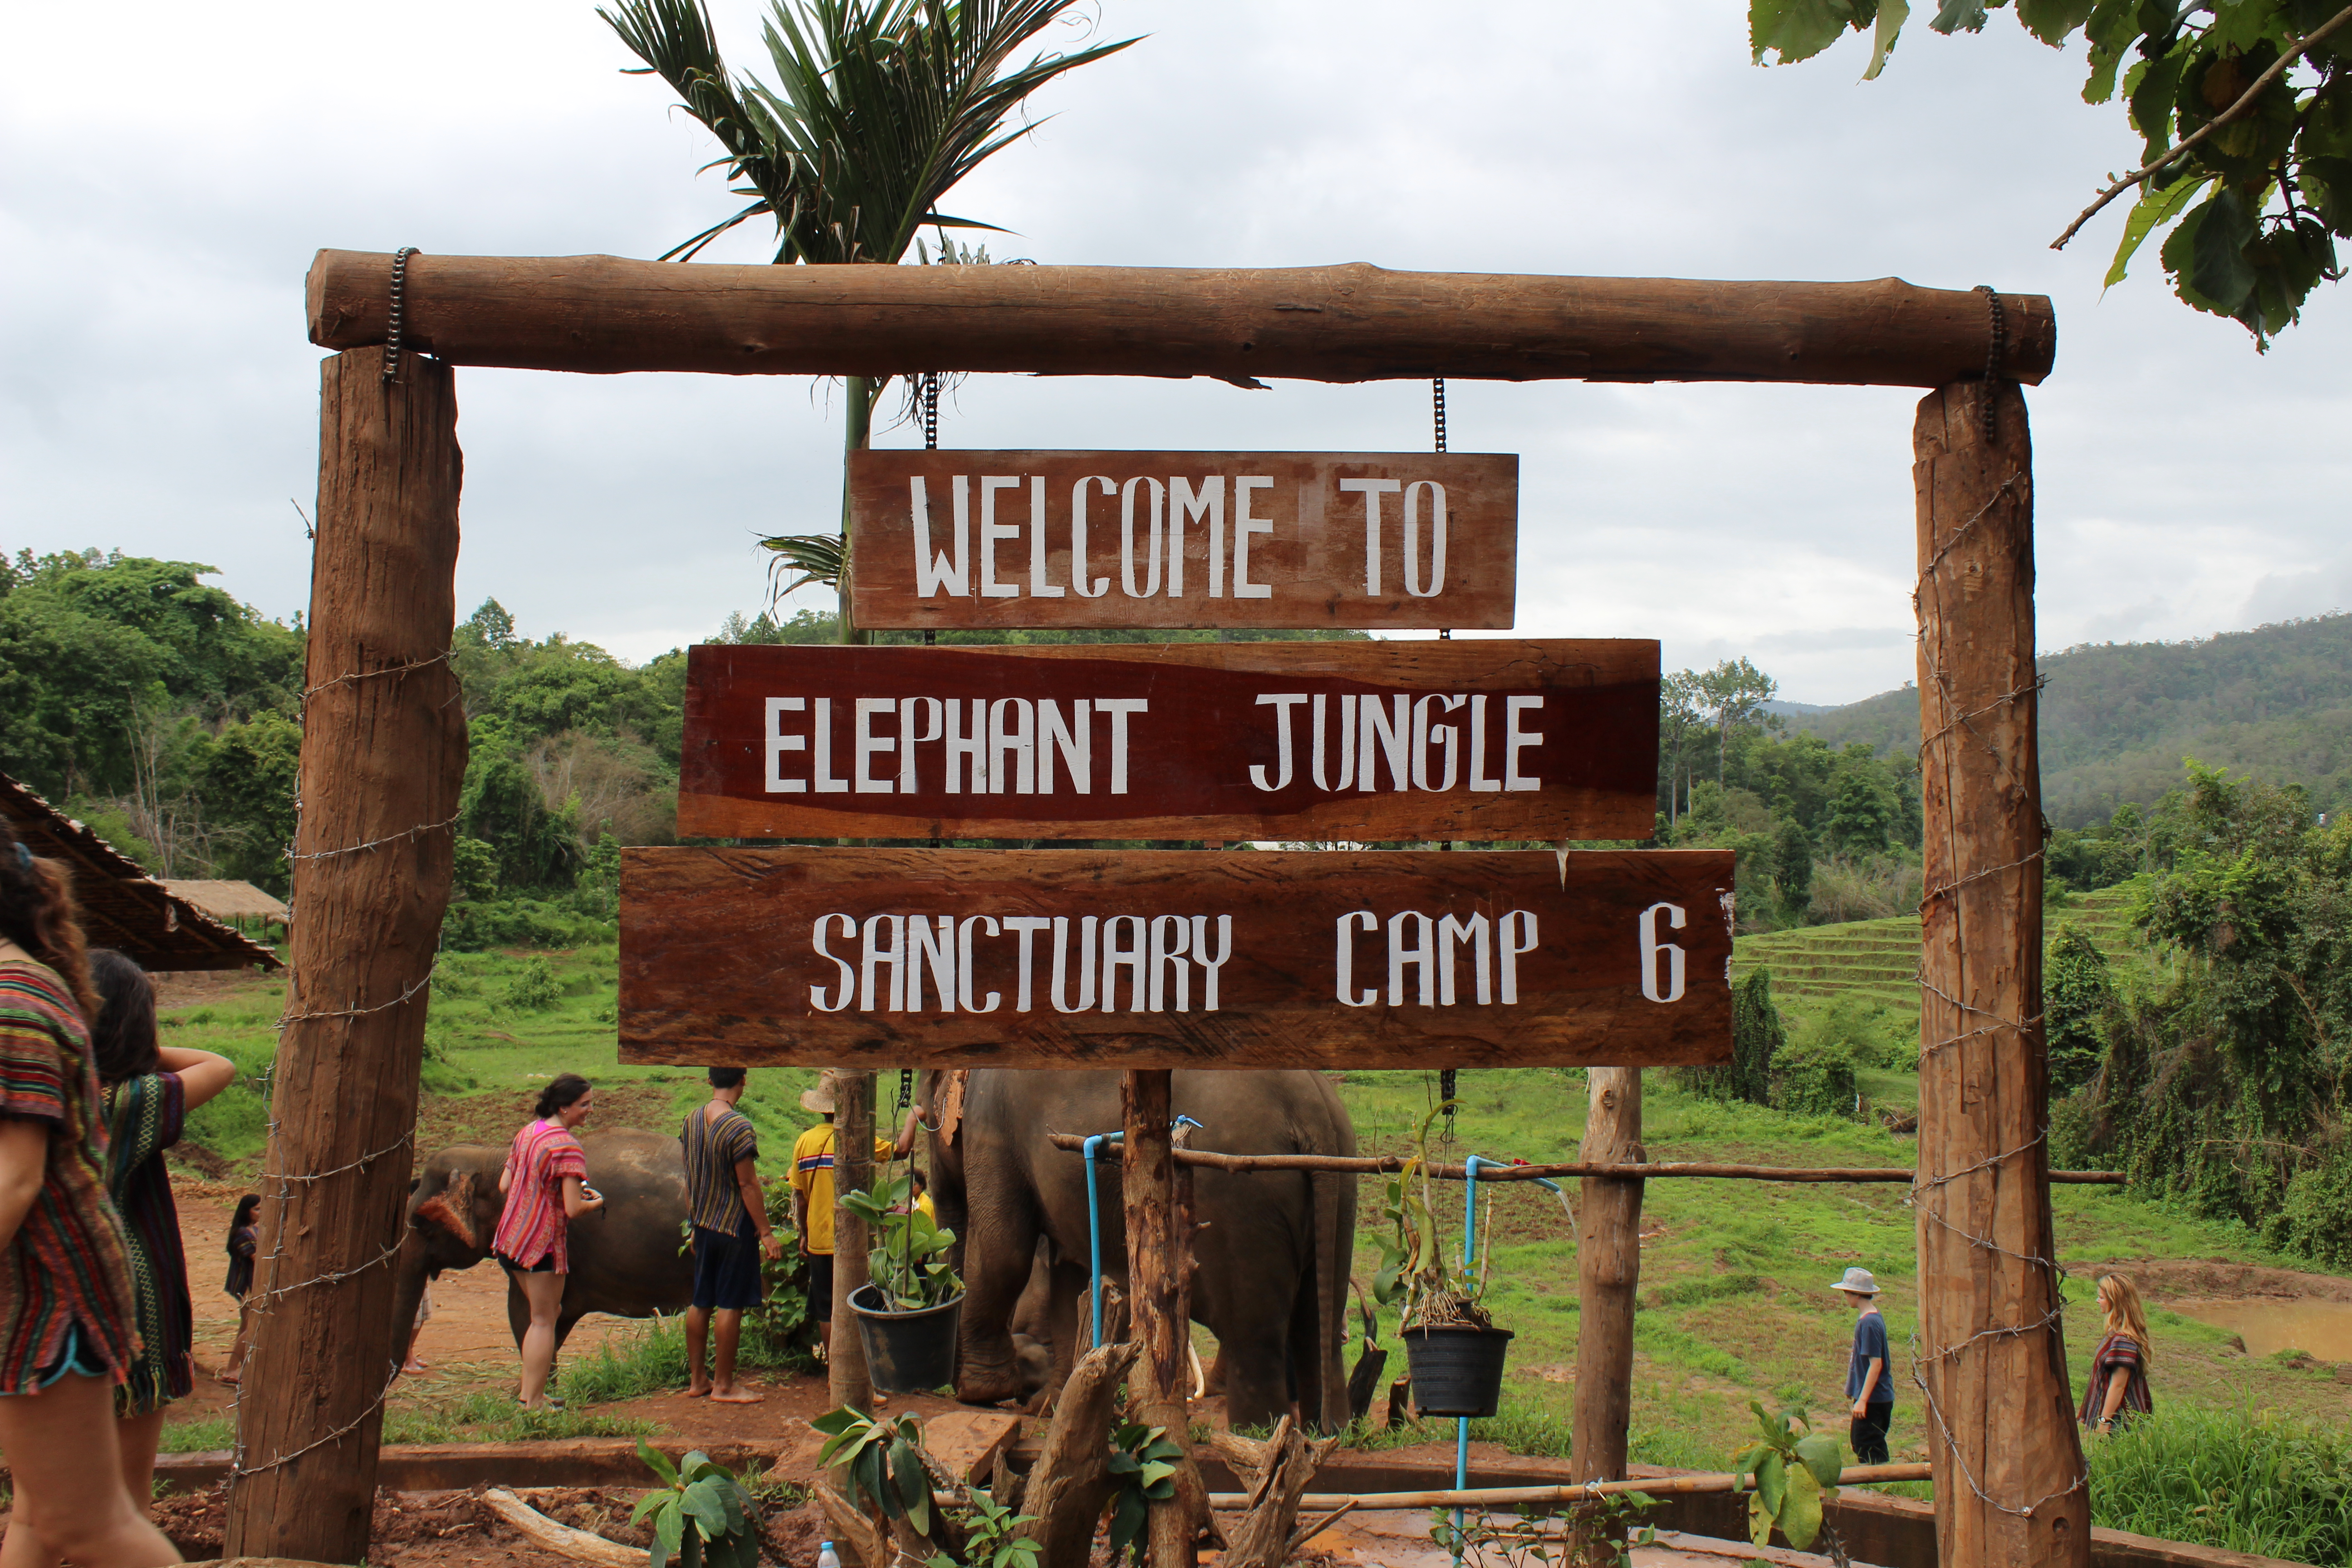 The Elephant Jungle Sanctuary.